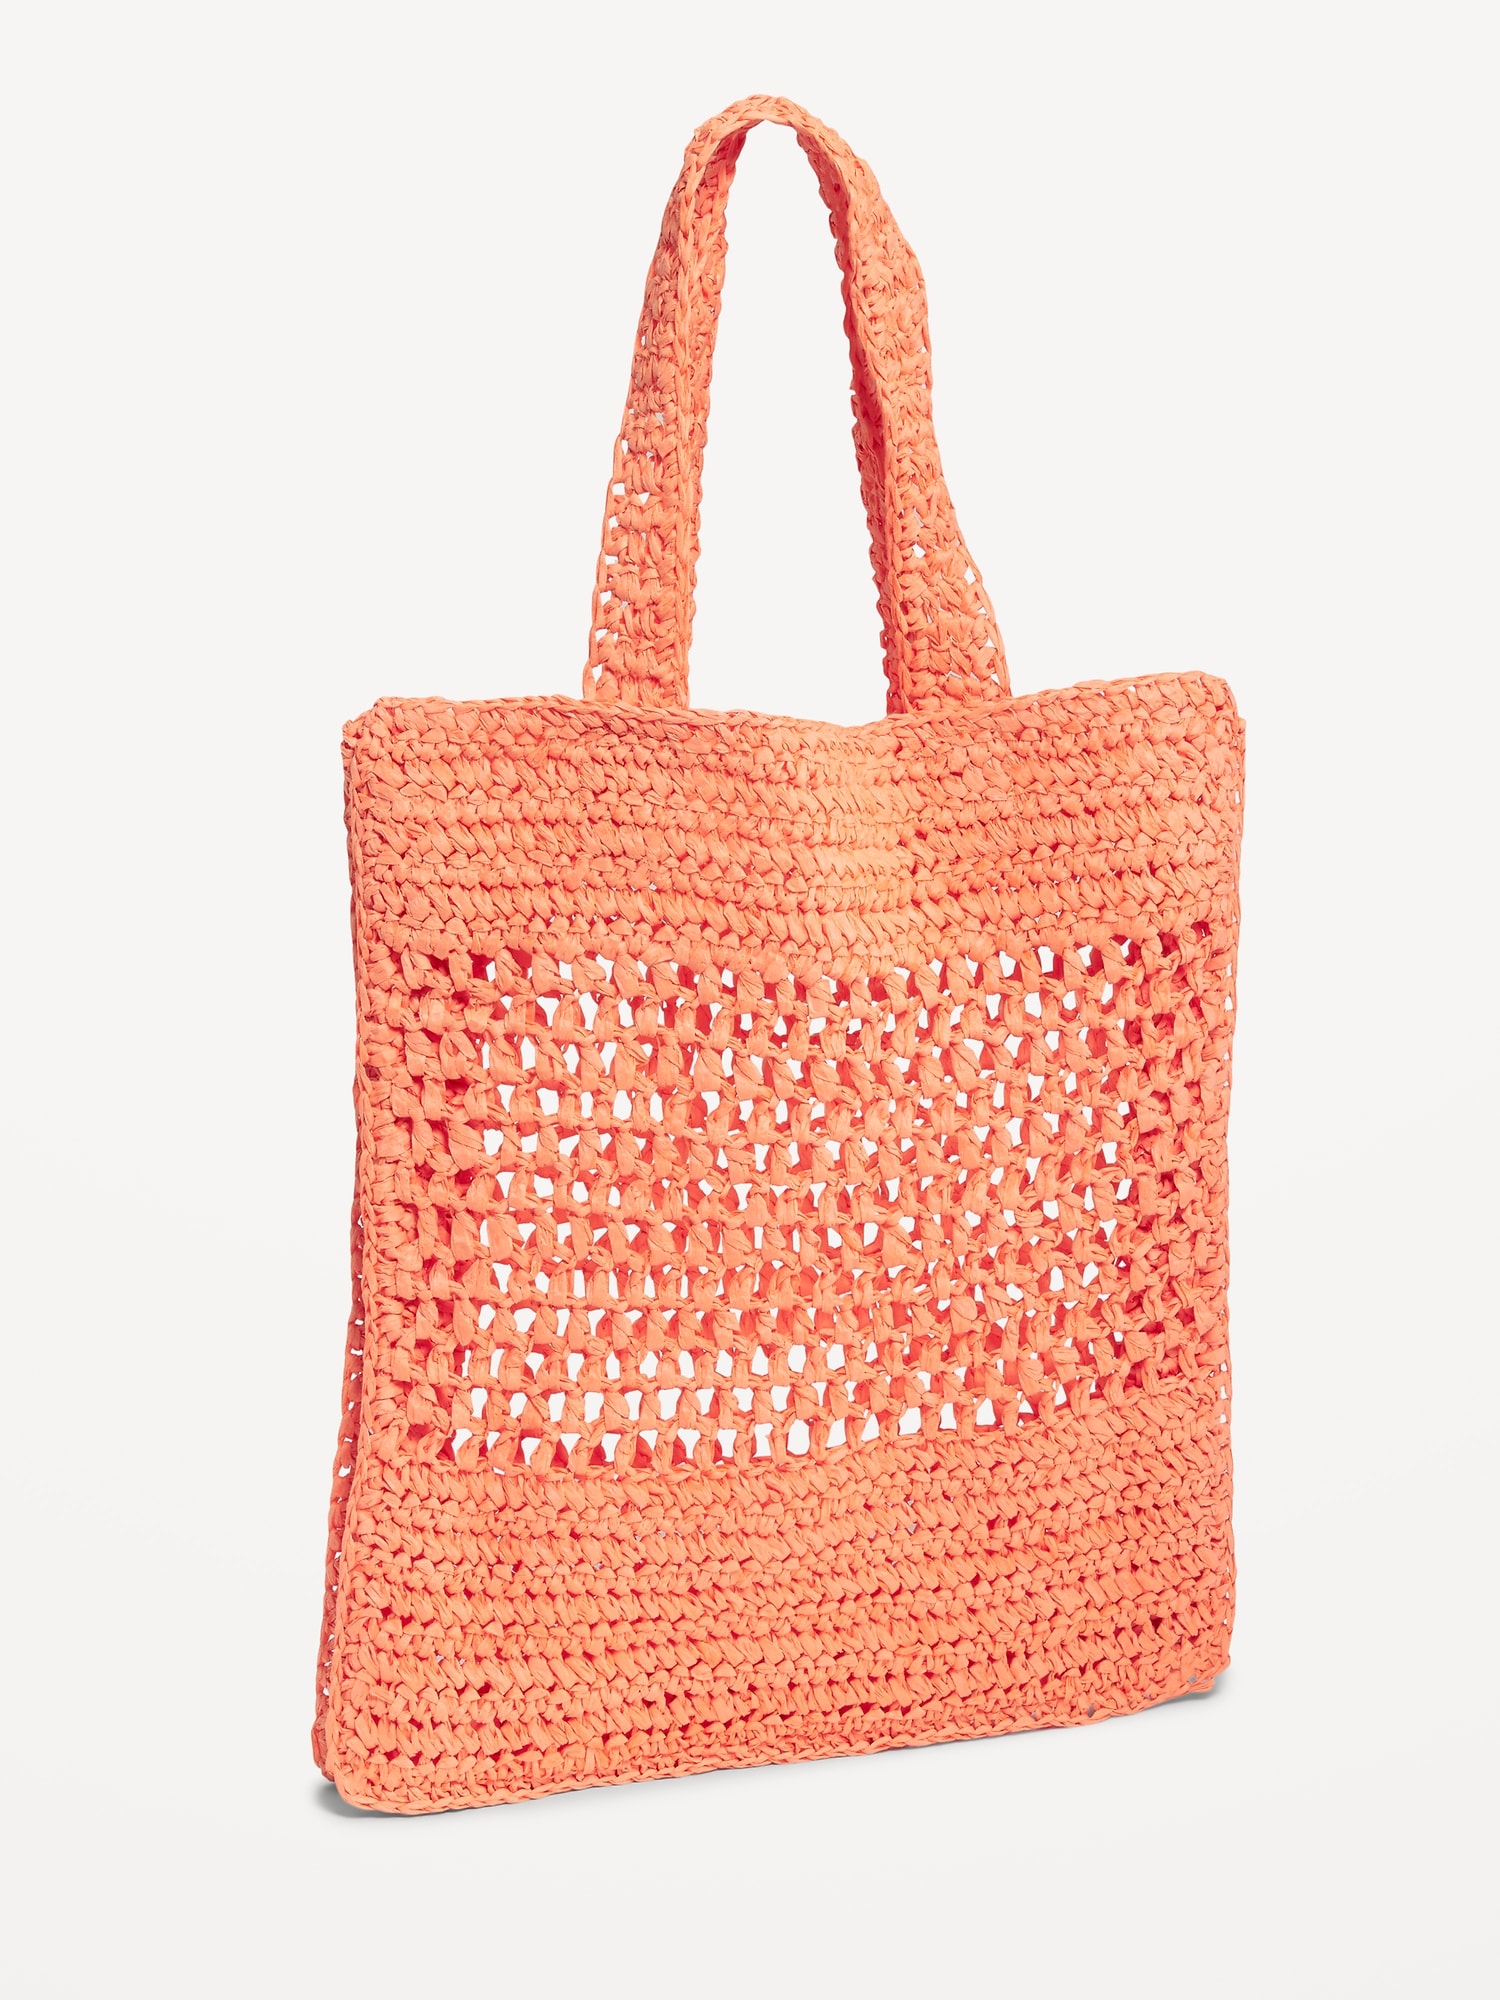 Old Navy Women's Straw-Paper Crochet Tote Bag Orange One Size